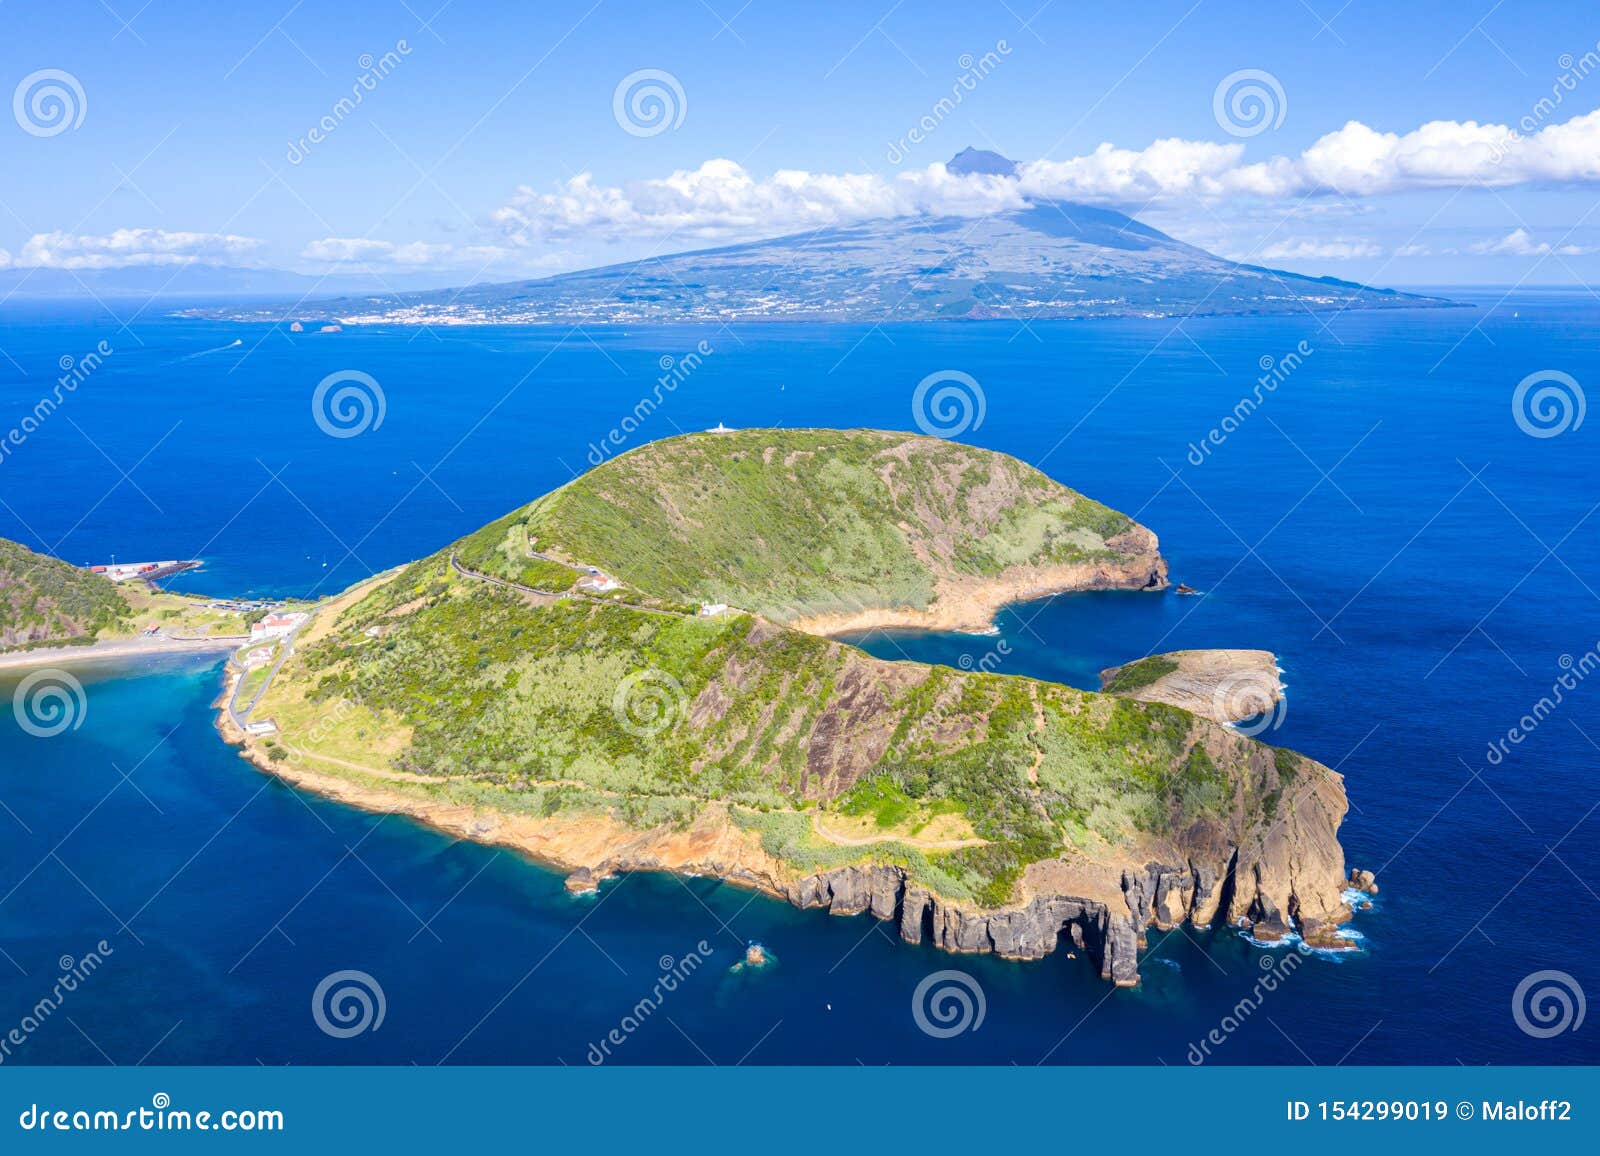 Extinct Craters of Caldeirinhas, Mount Horta, Faial Island with the Peak of Pico Volcanic Mountain, Azores, Portugal Stock Image - Image of extinct, 154299019